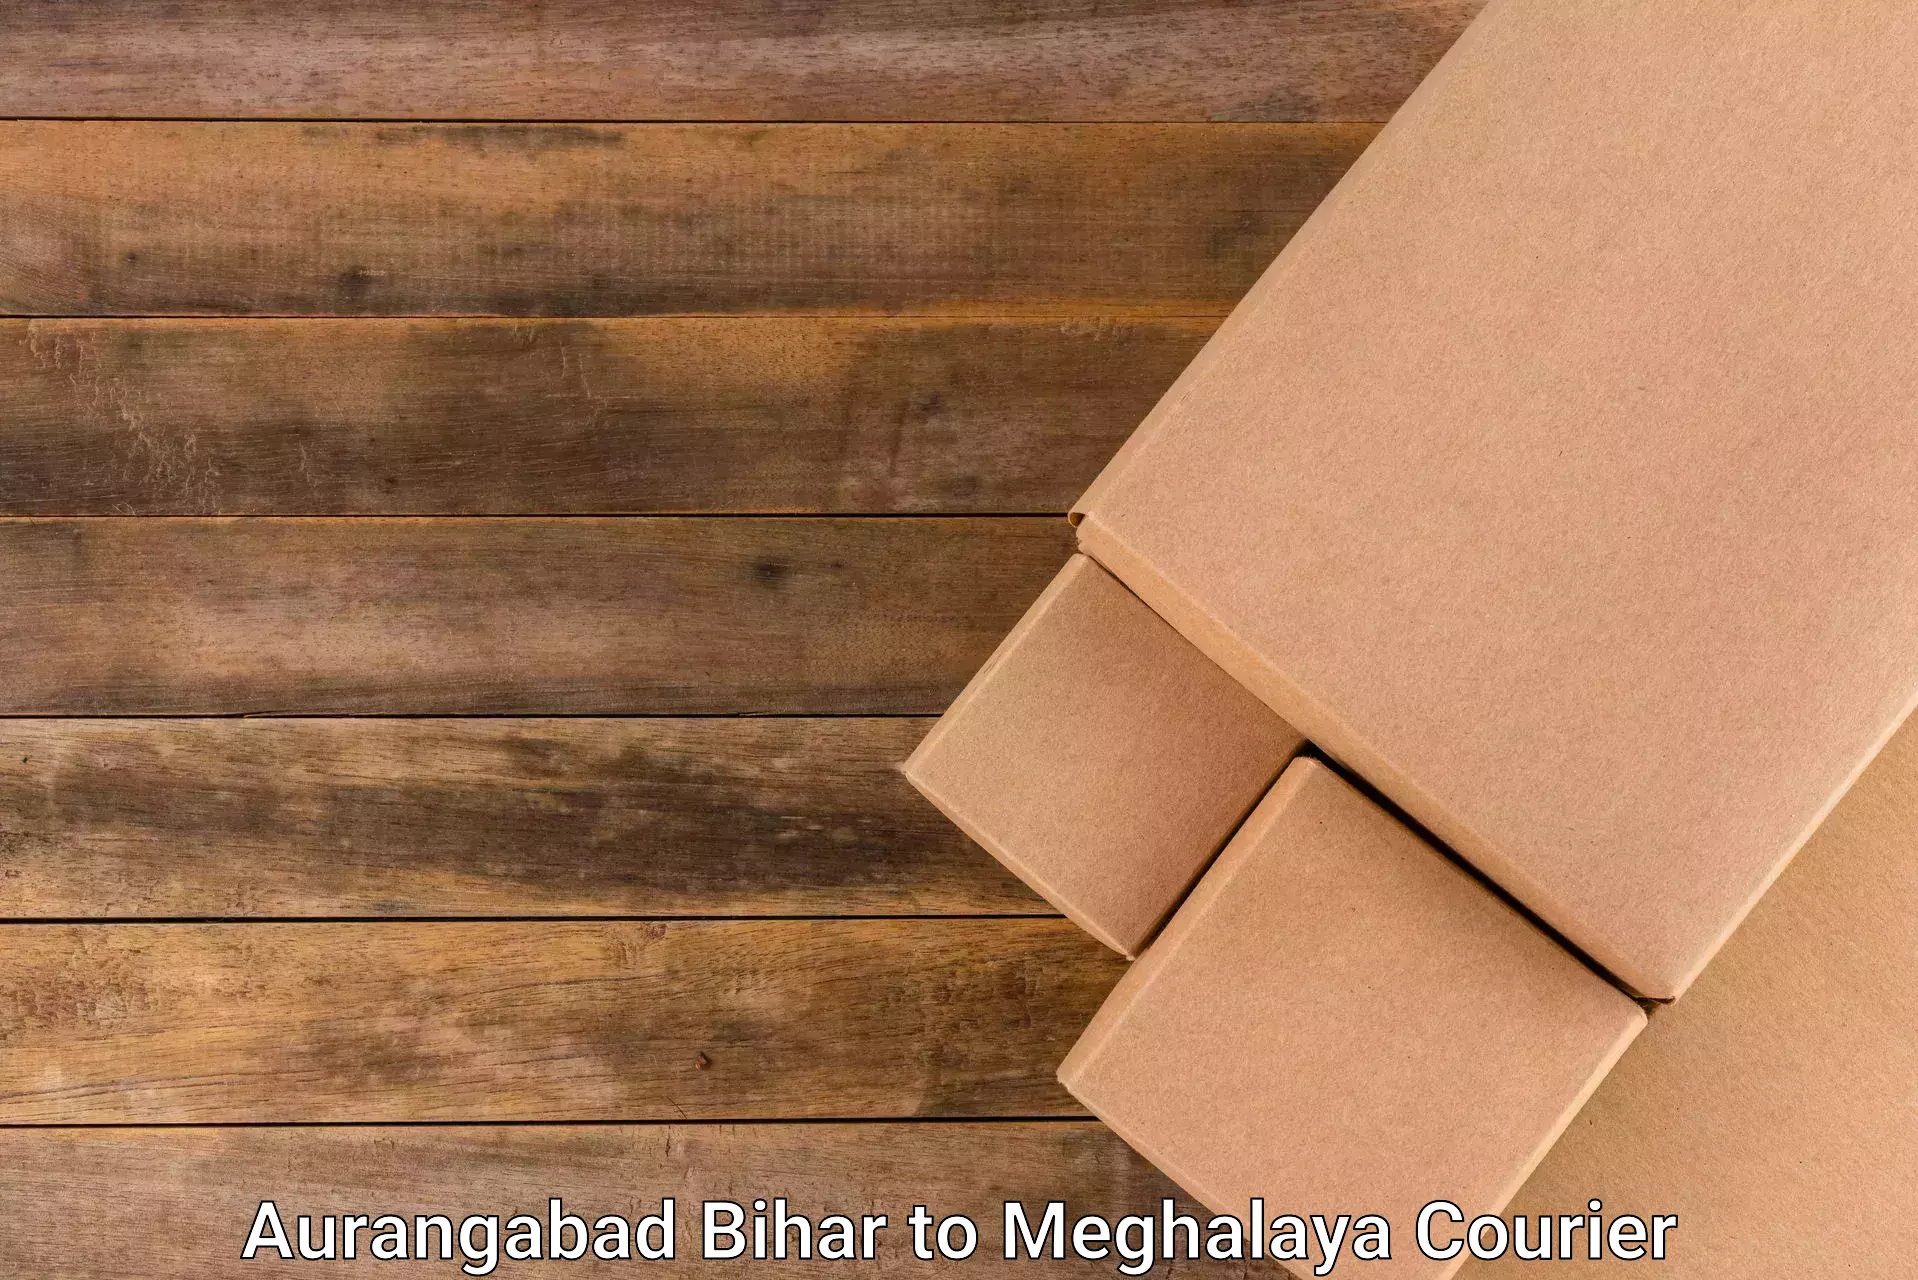 Discounted shipping Aurangabad Bihar to Meghalaya